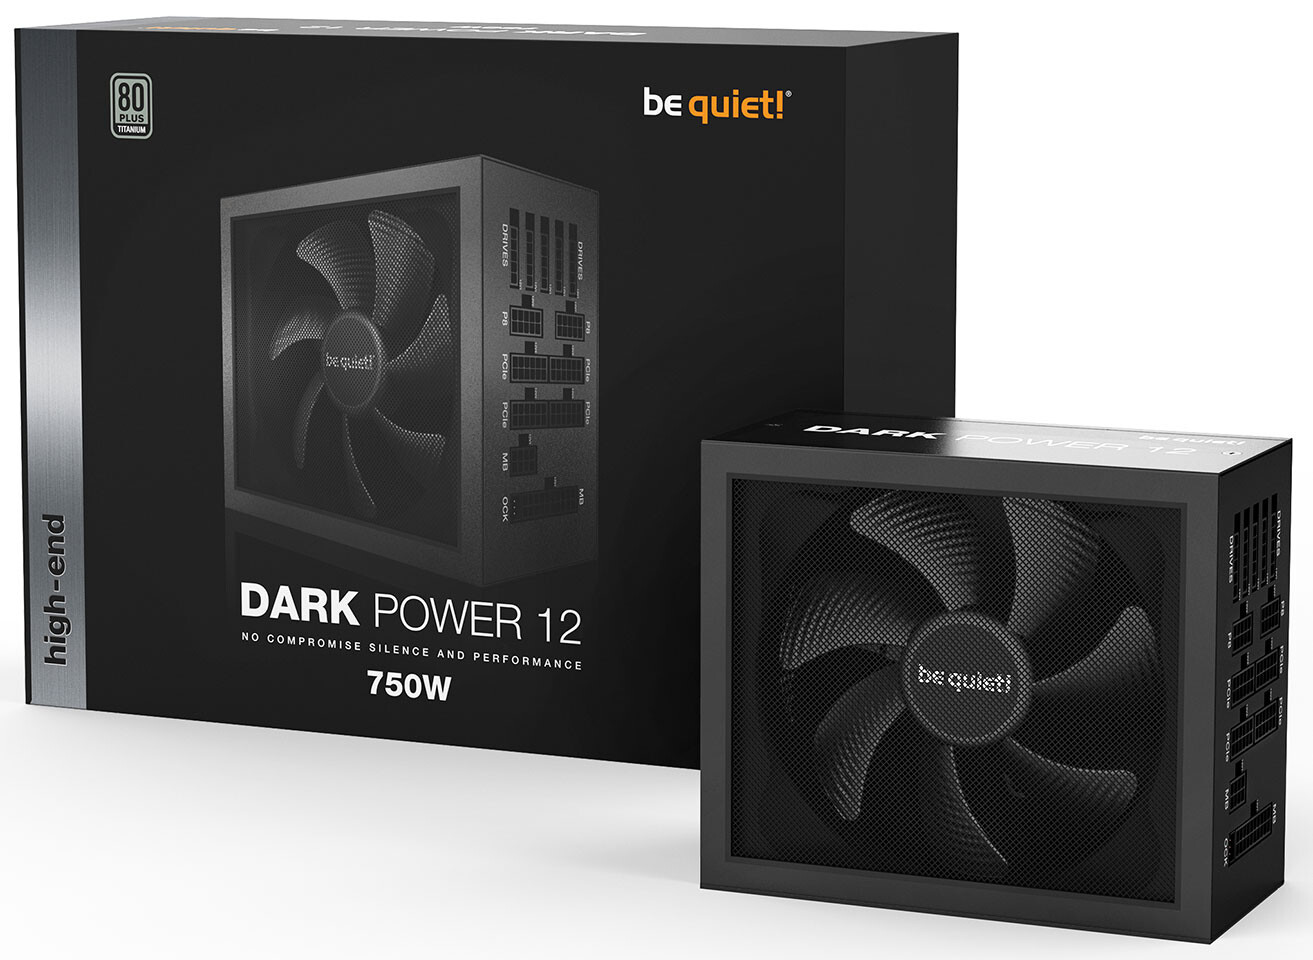 be quiet! Announces Dark Power 12 Power Supply Series | TechPowerUp